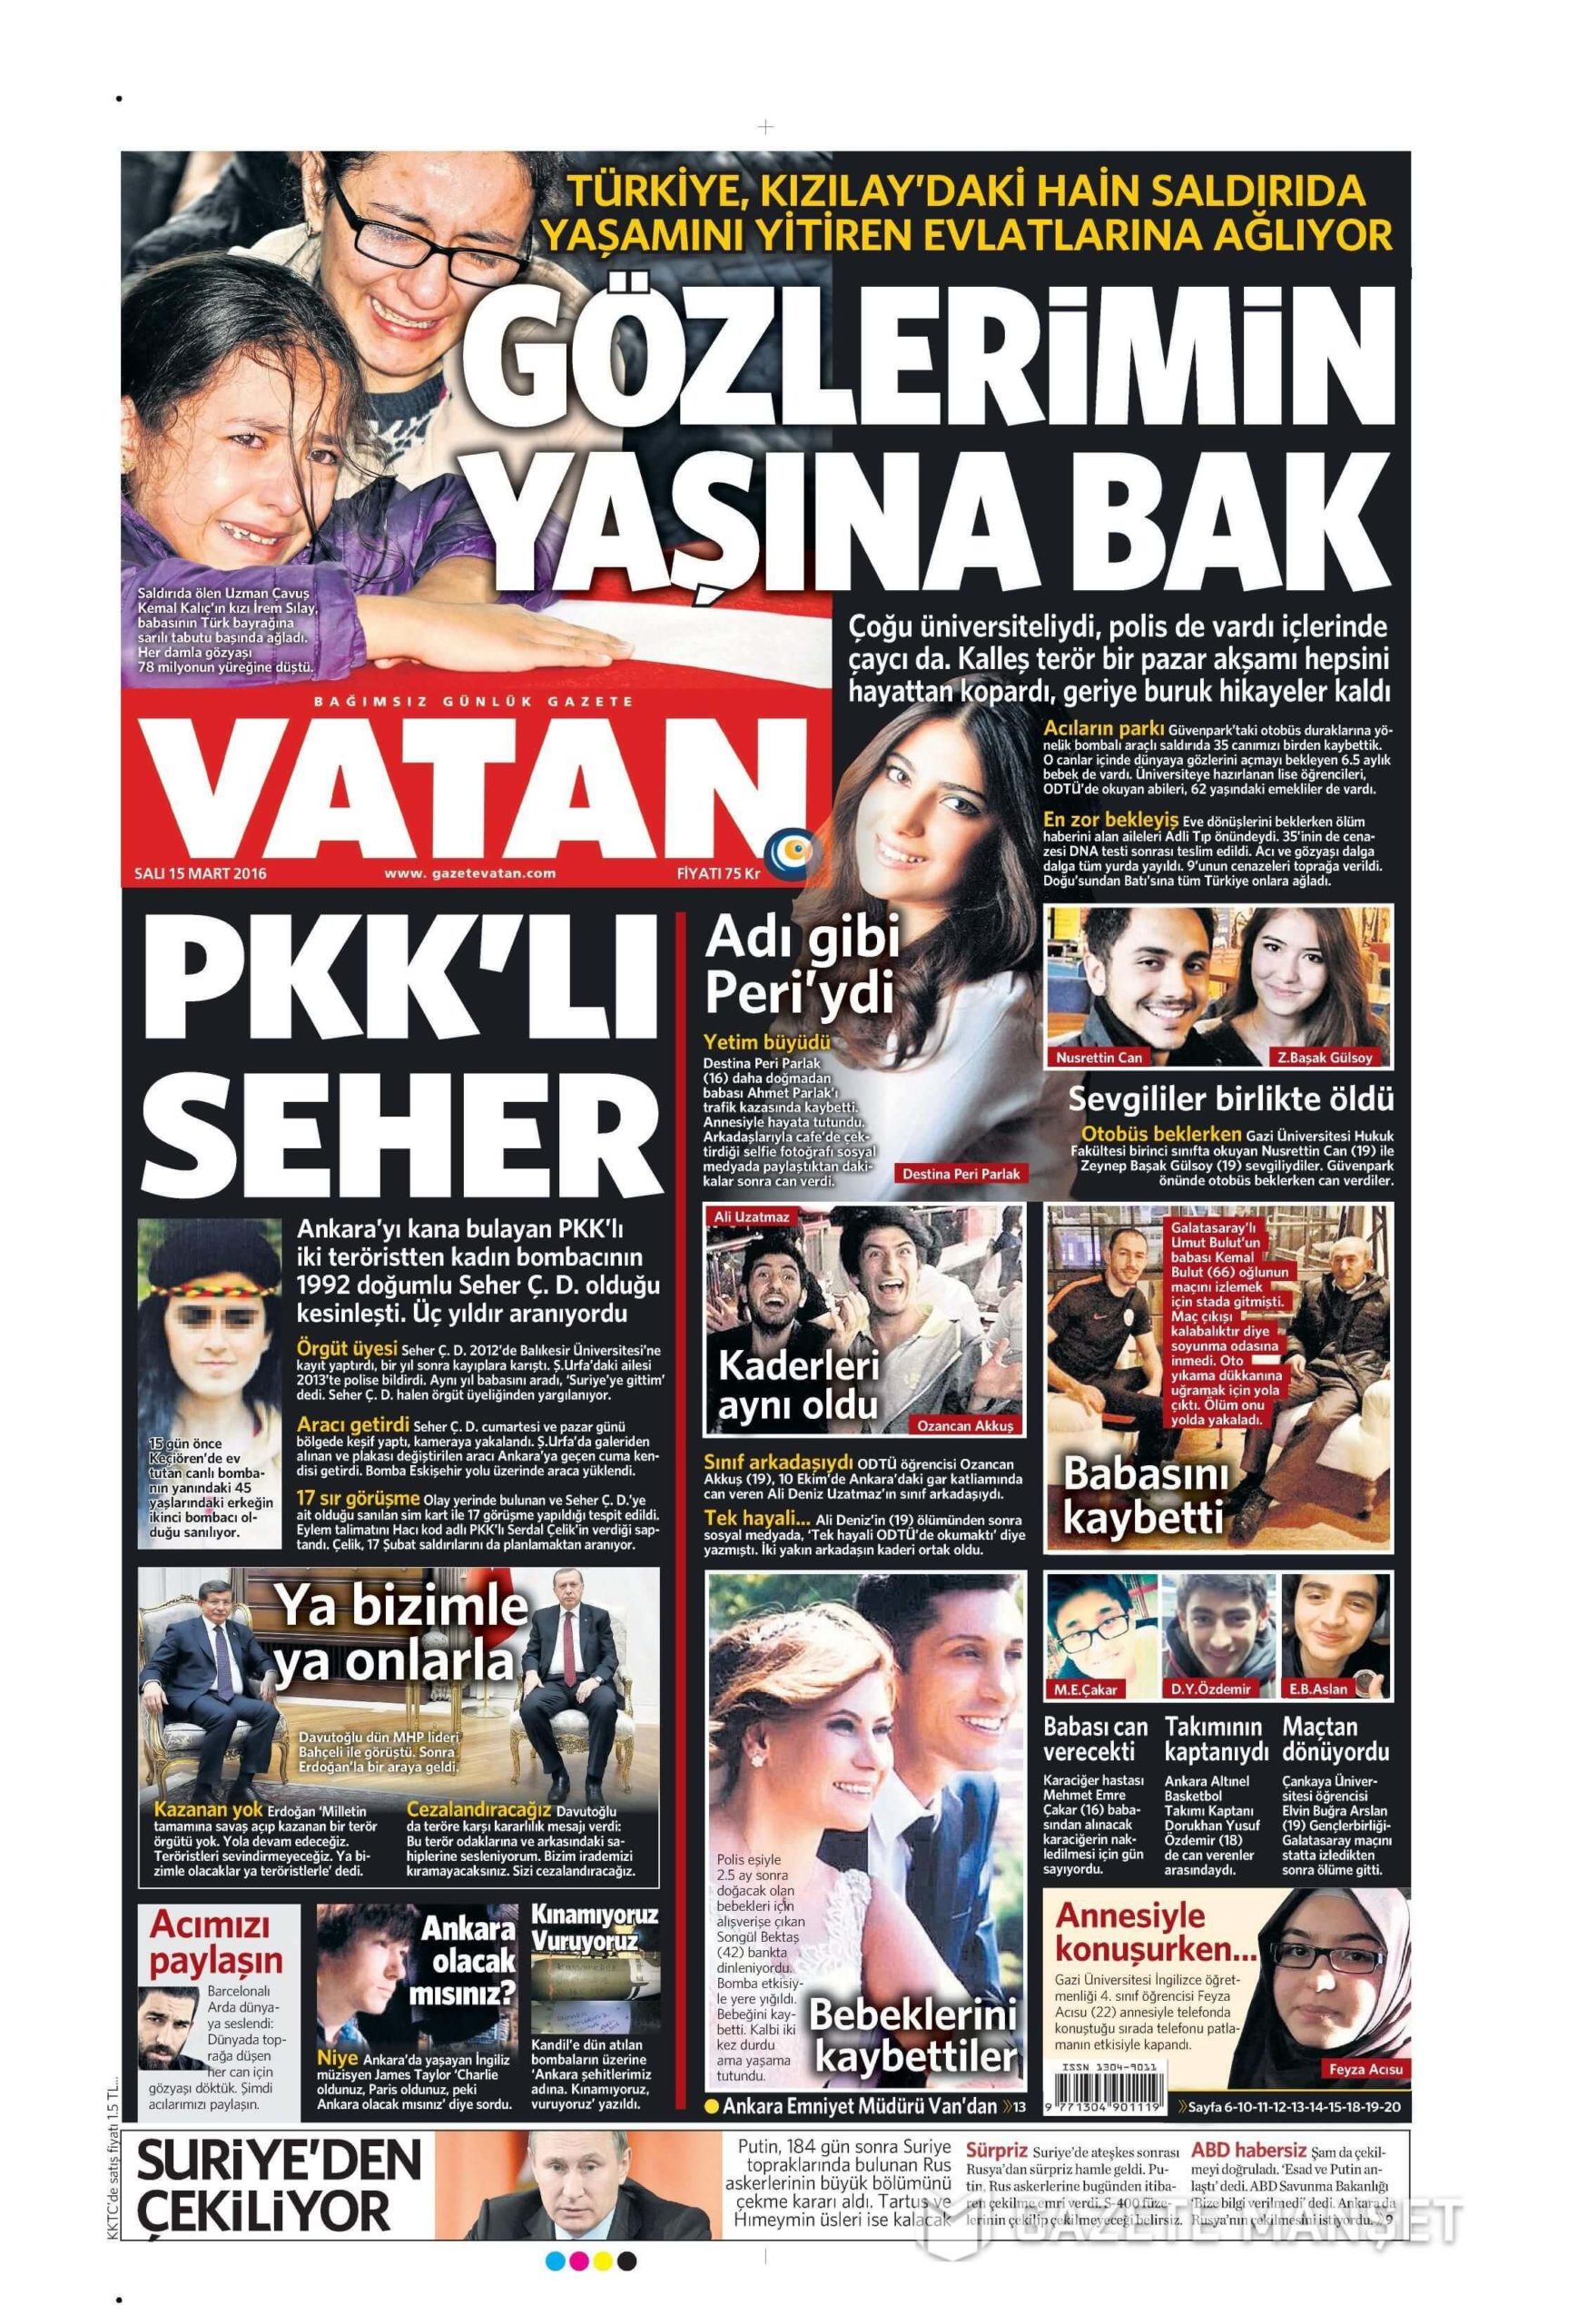 Turkish Newspapers 16 Vatan scaled